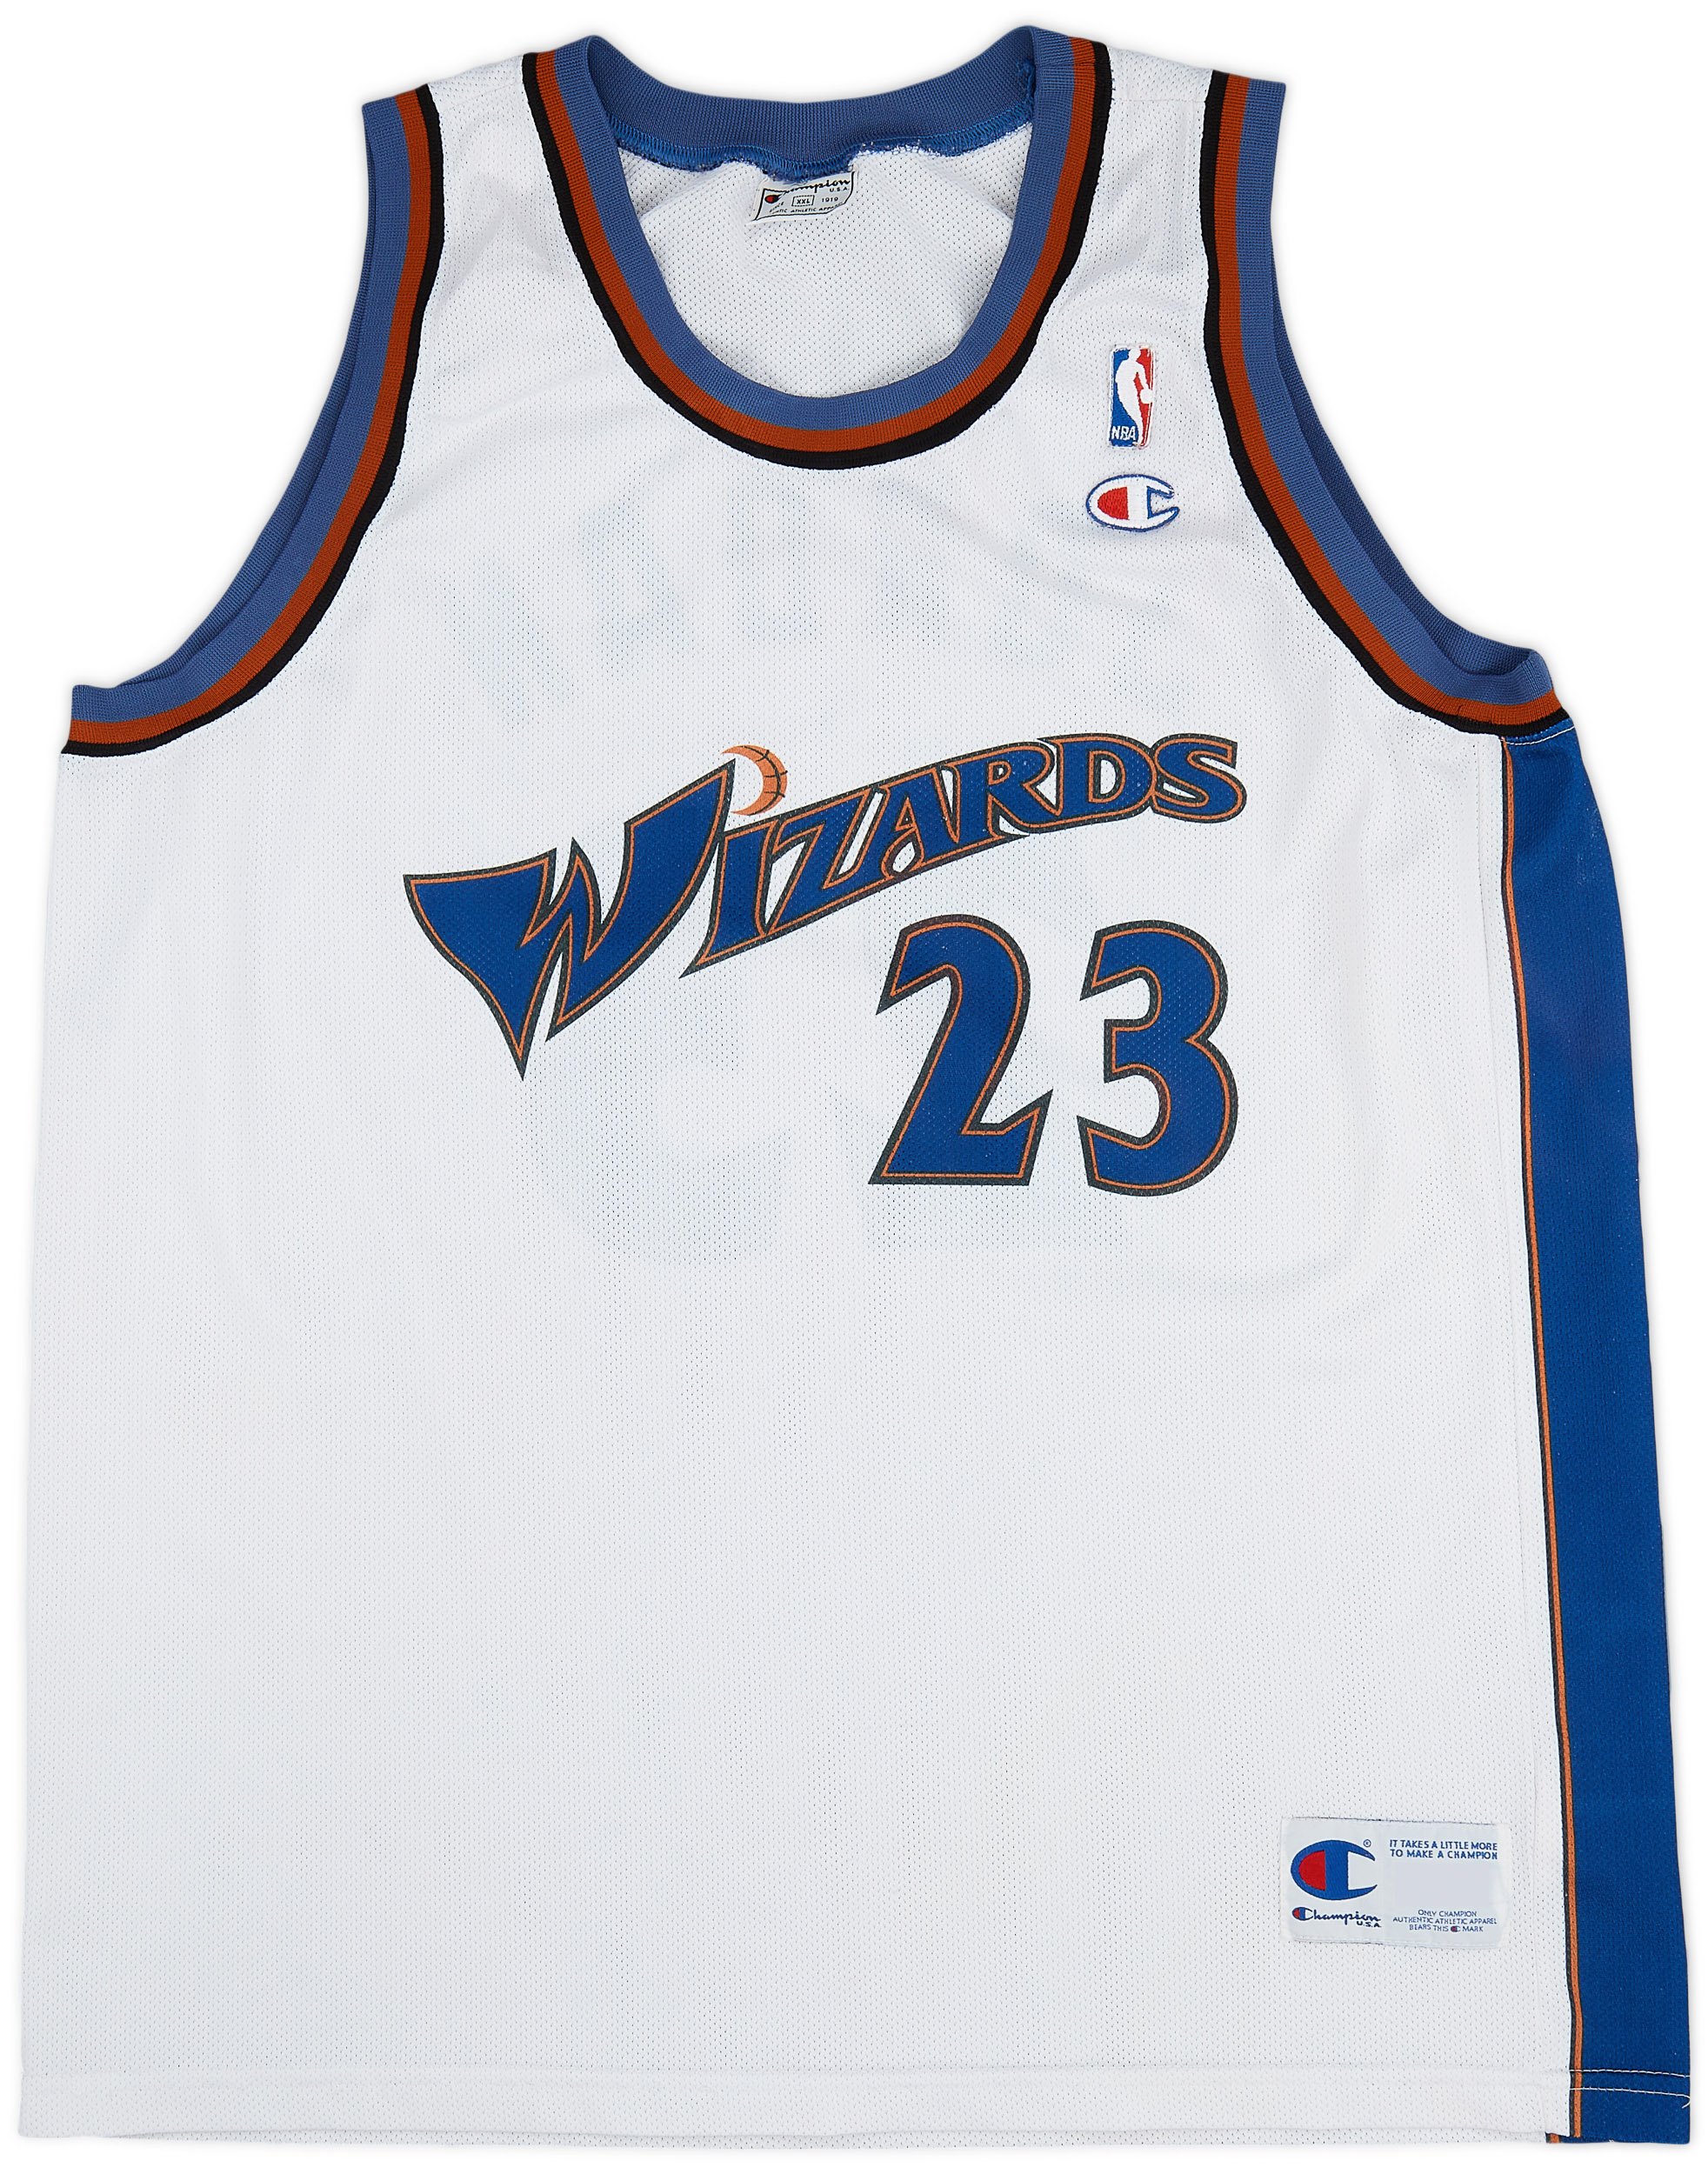 2001-03 Washington Wizards Jordan #23 Champion Home Jersey (Very